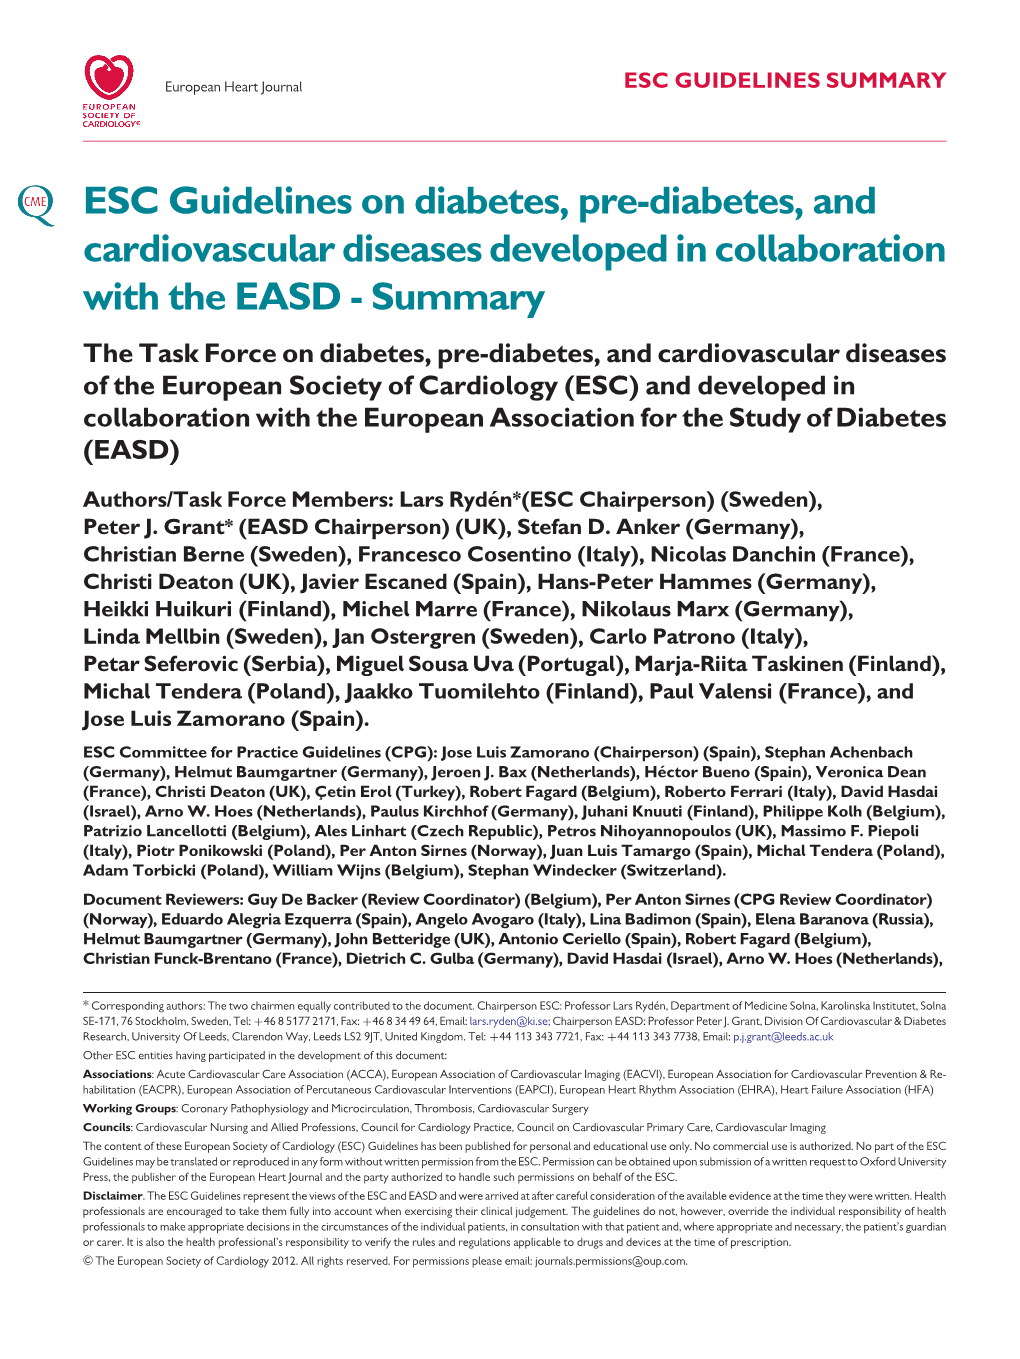 ESC Guidelines on Diabetes, Pre-Diabetes And